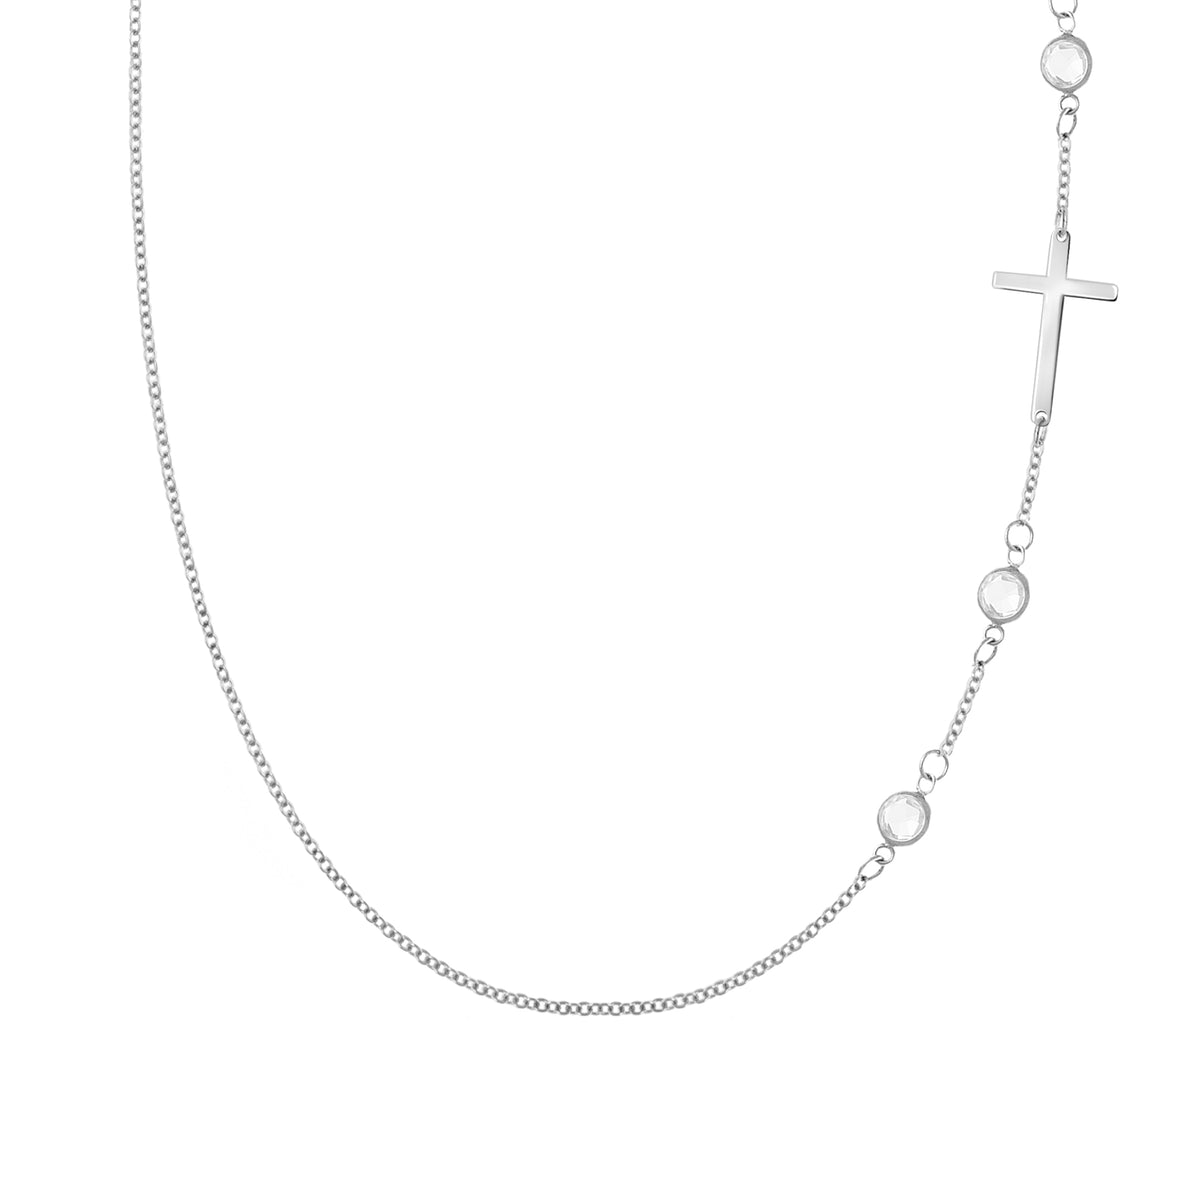 Bershka RHINESTONE CROSS - SET OF 3 - Necklace - silver  coloured/silver-coloured - Zalando.de